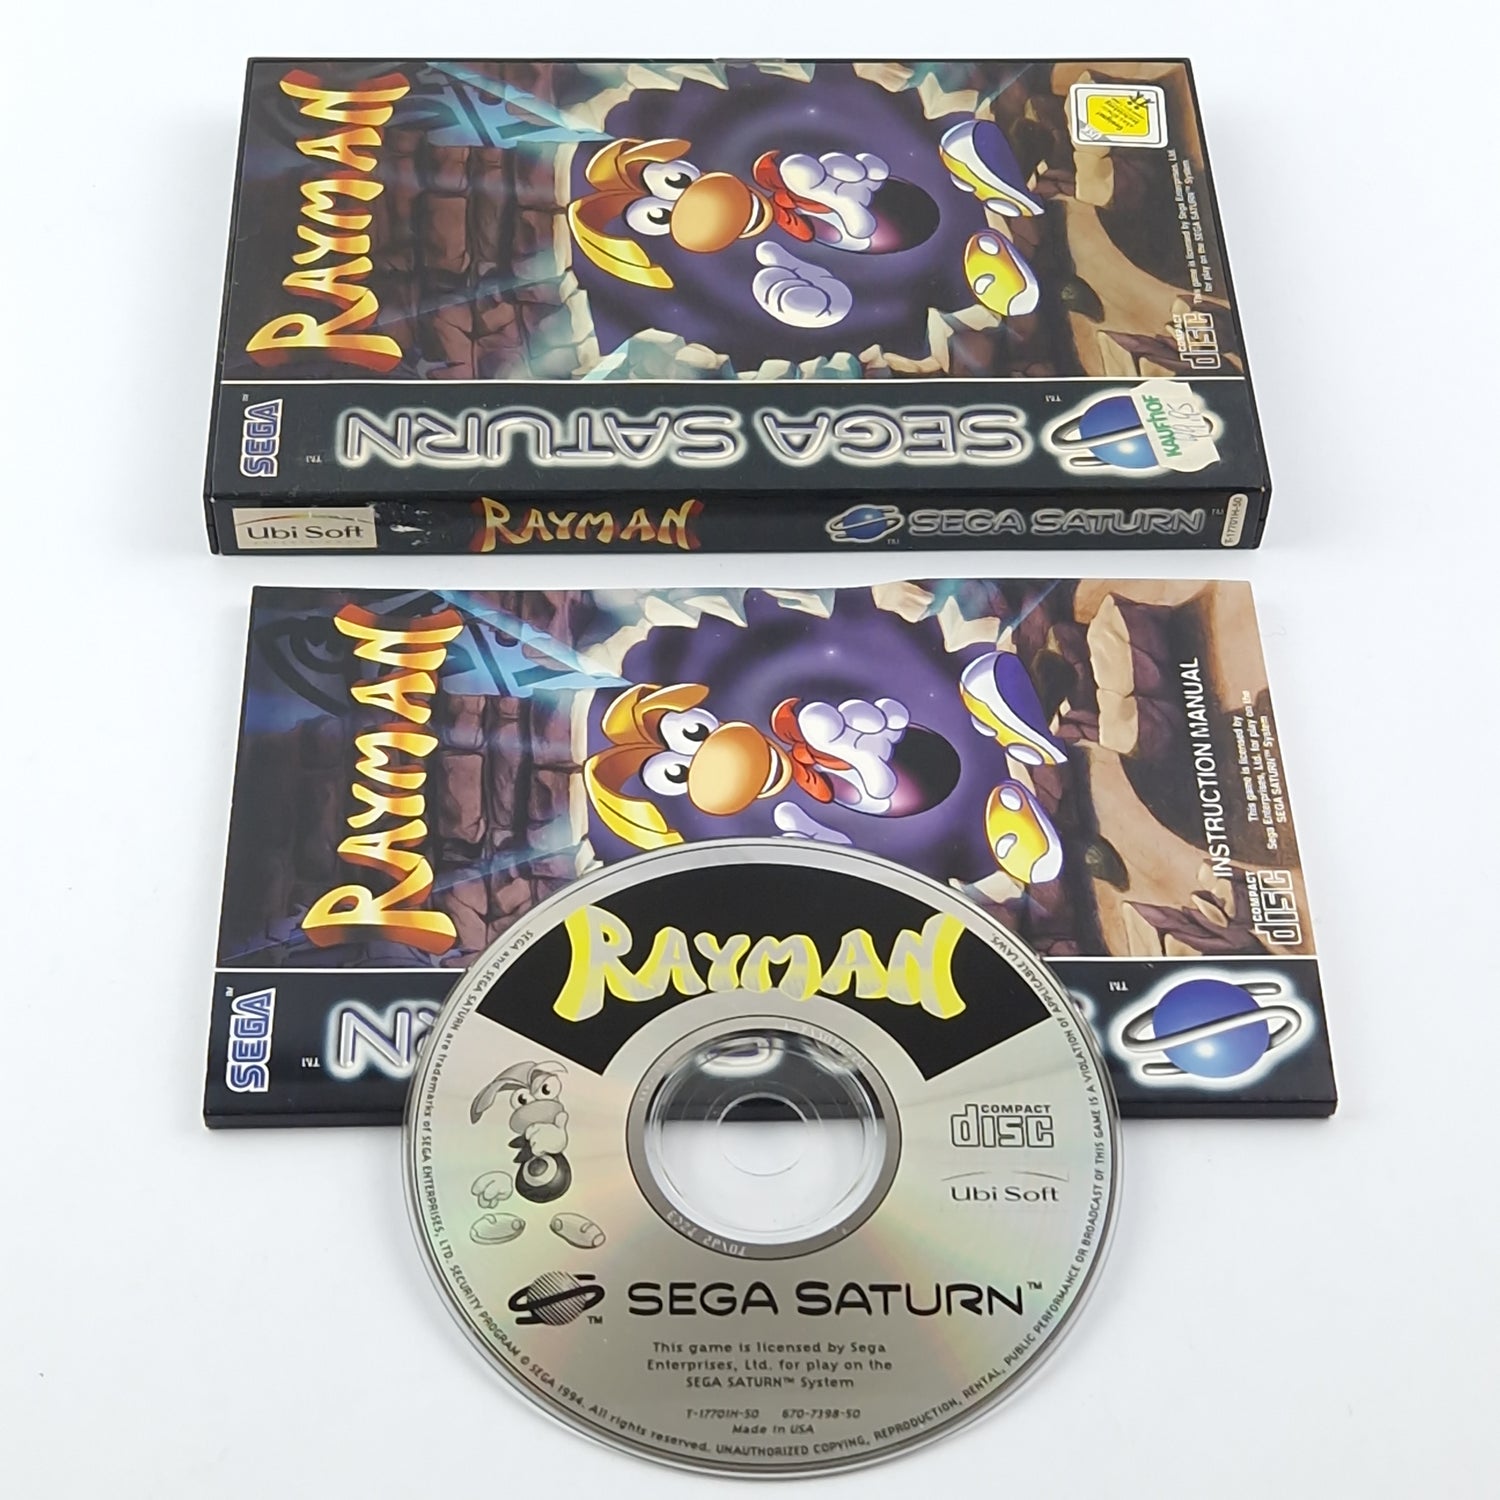 Sega Saturn Game: Rayman - OVP Instructions CD Disk System / PAL Version